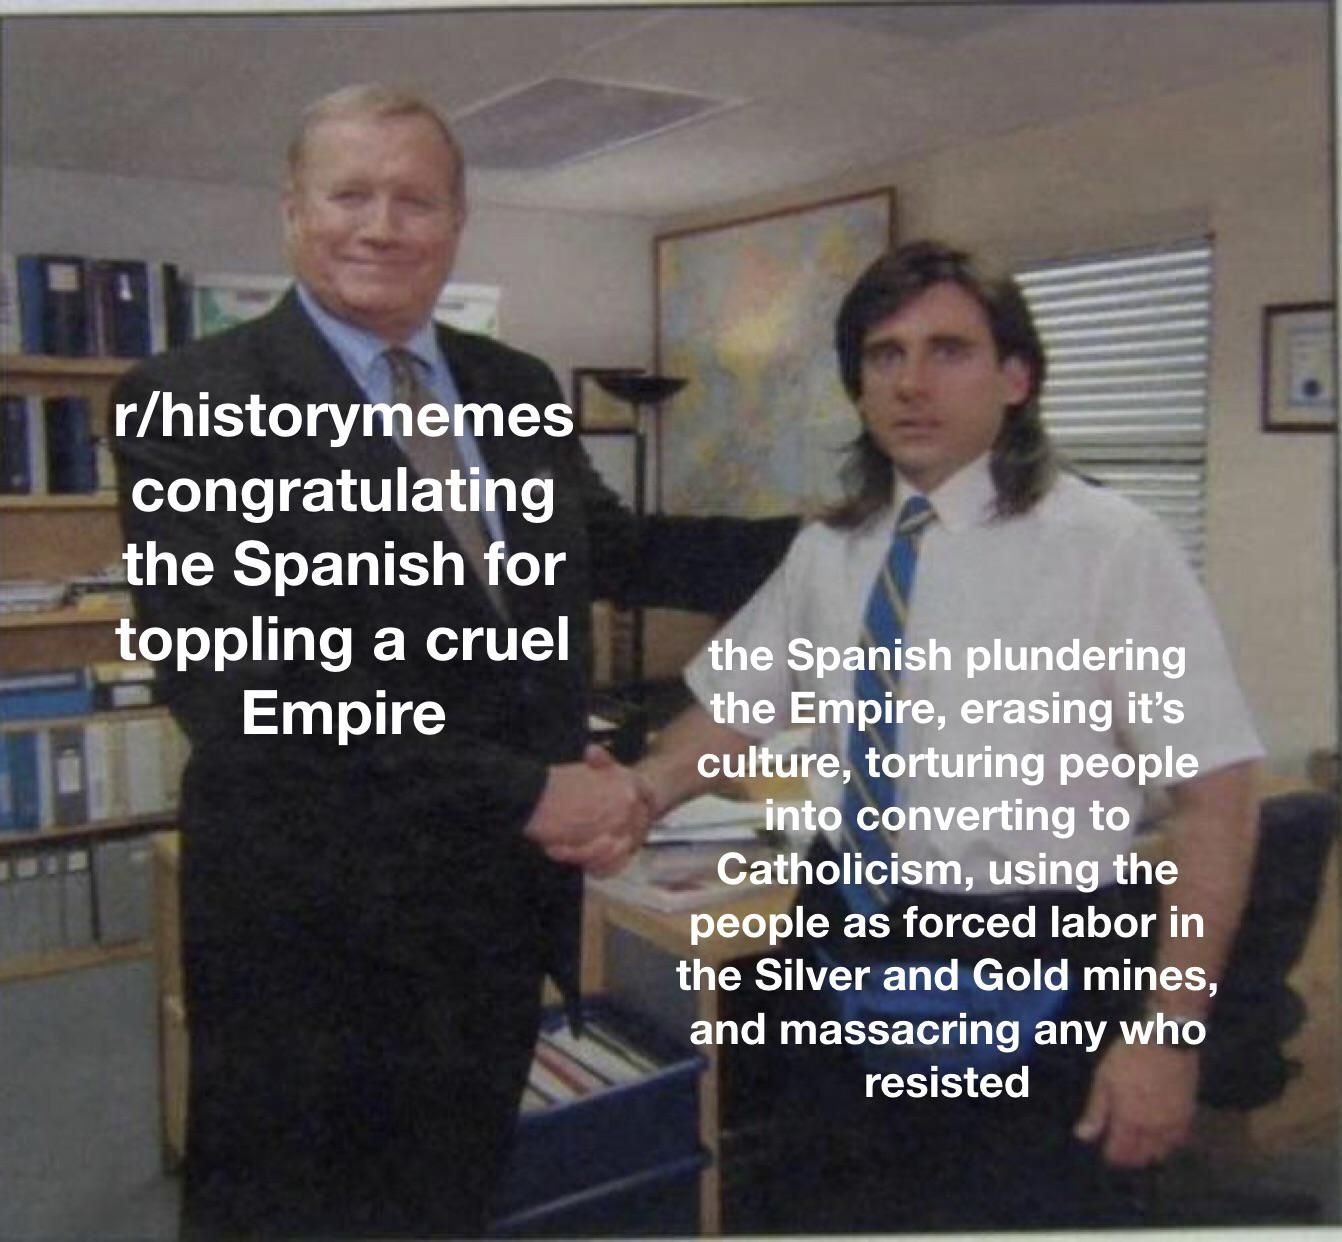 The Aztecs weren’t pretty but don’t go around praising the Spanish for something 100x worse